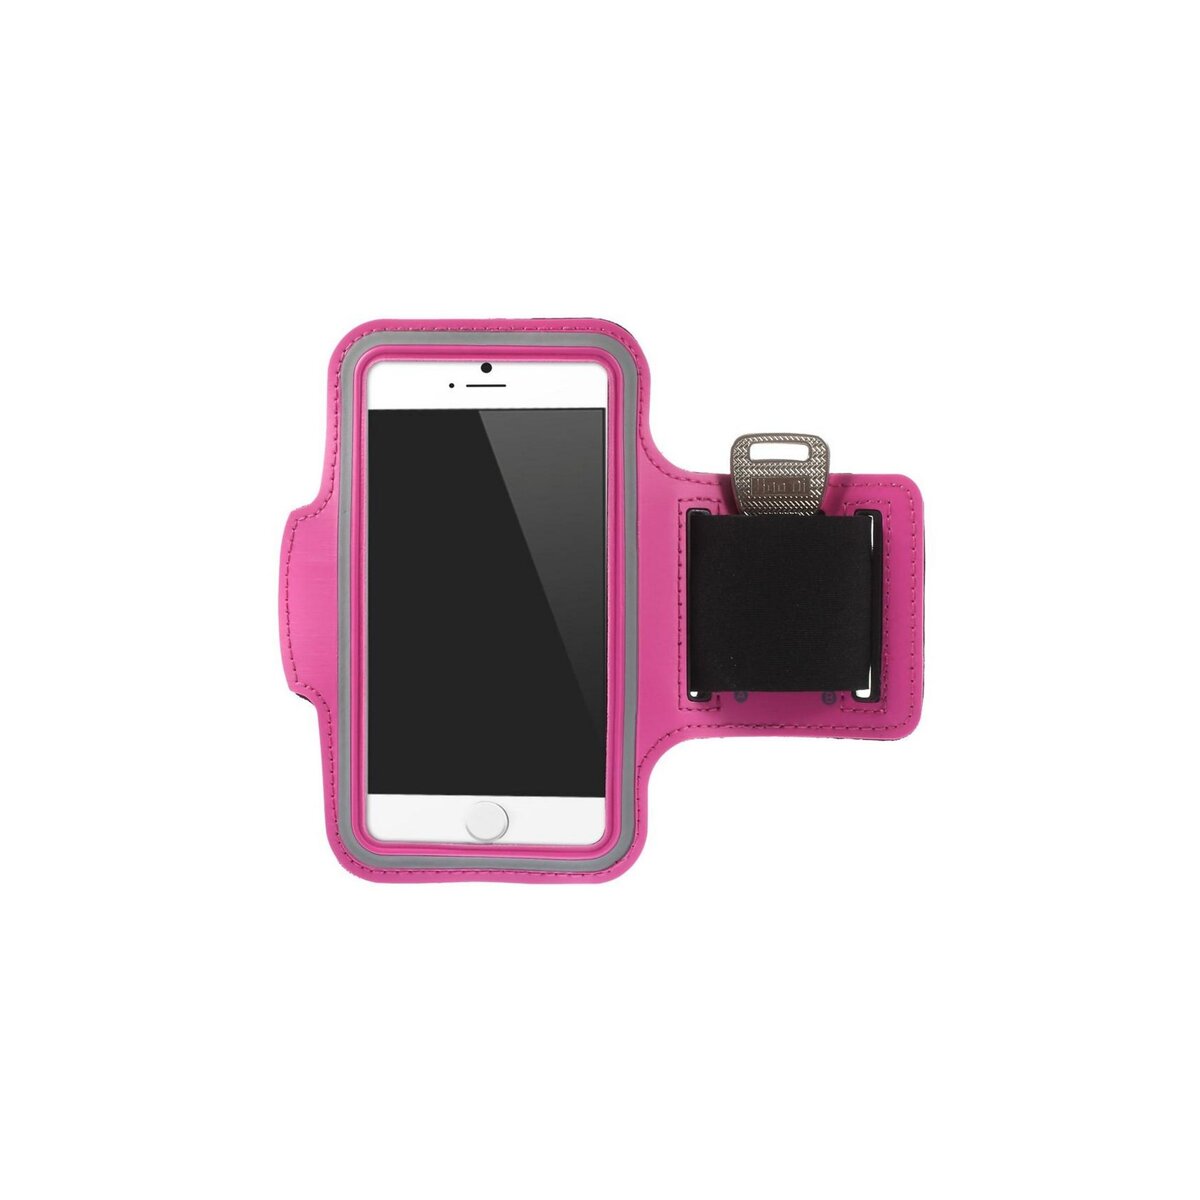 amahousse Brassard sport iPhone 6S rose néoprène confortable